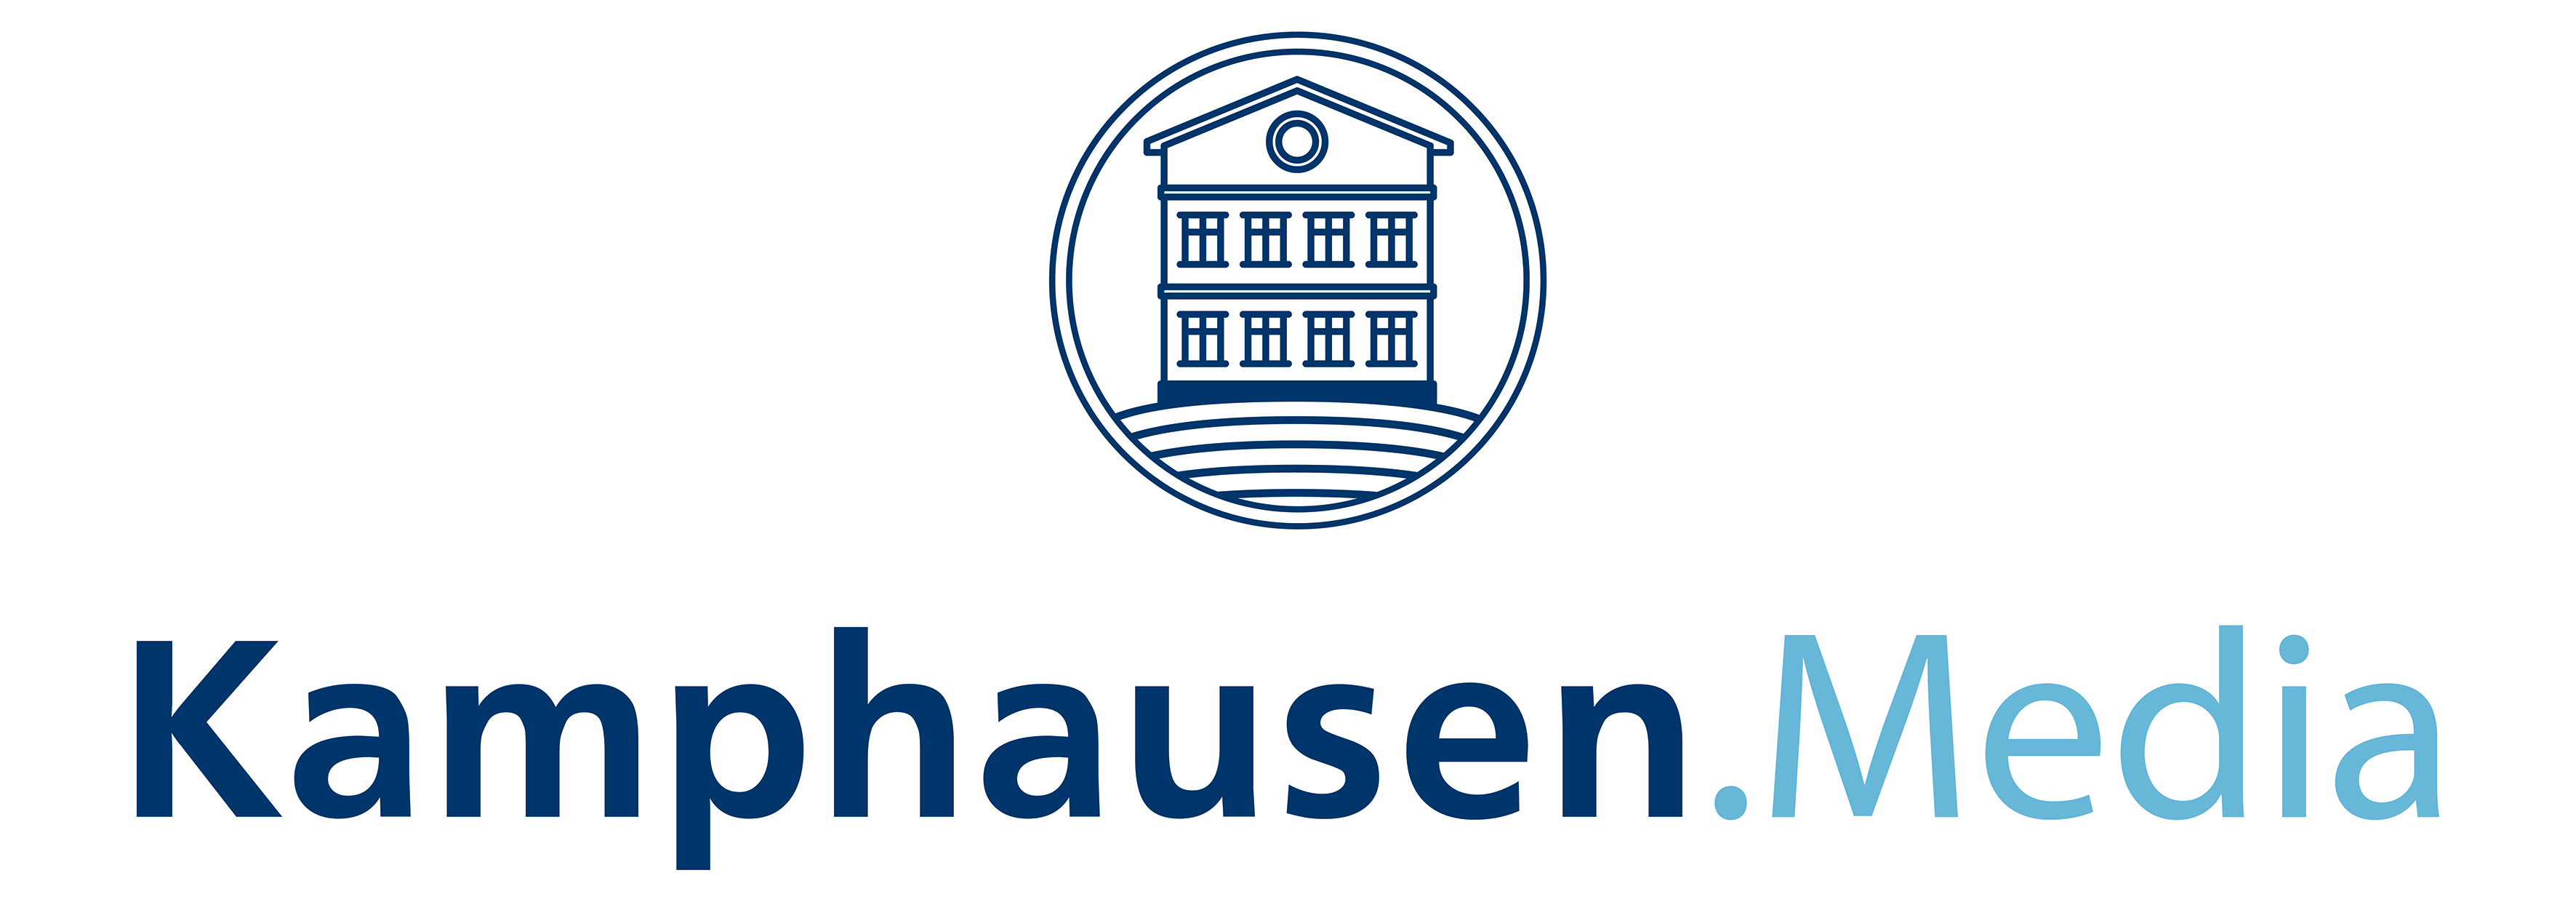 Kamphausen Media Logo